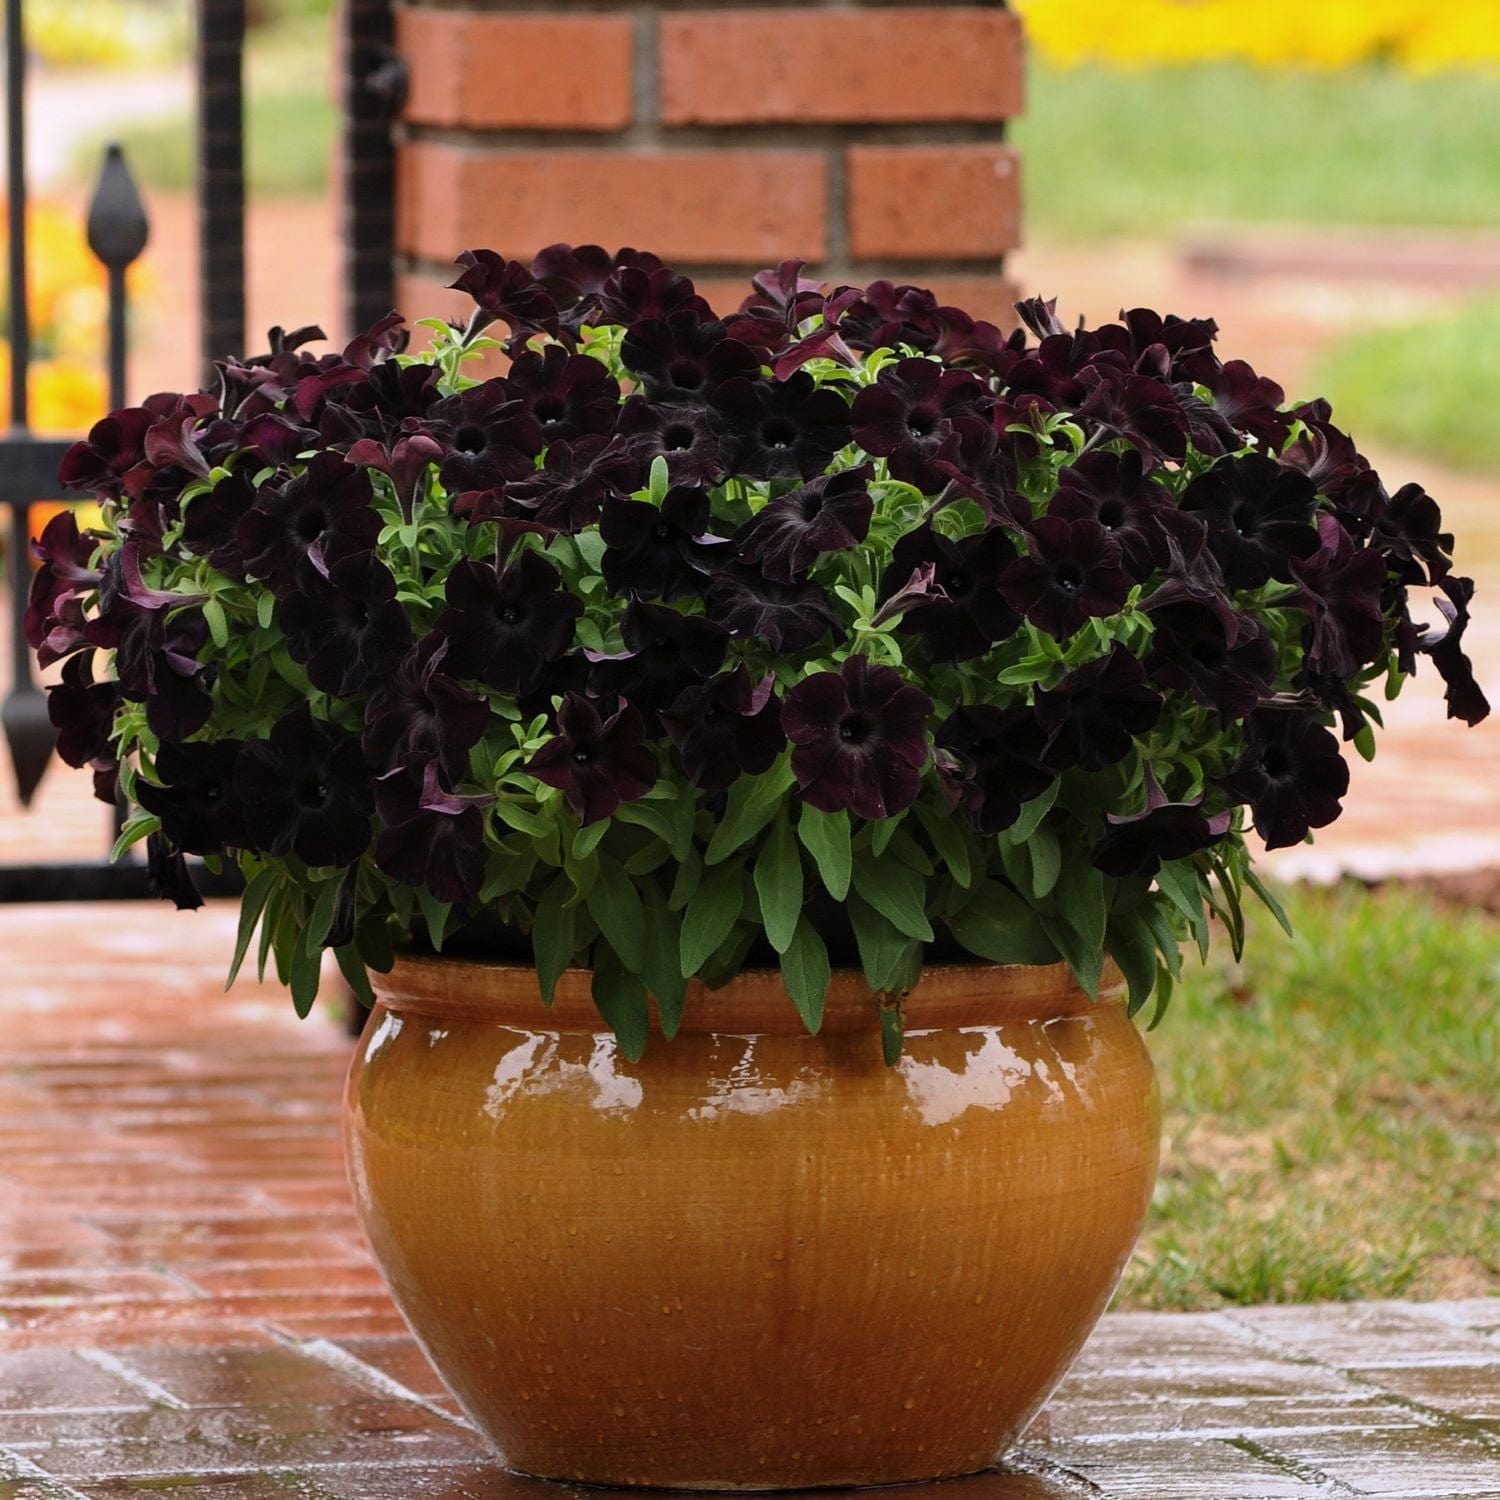 dt-brown FLOWER PLANTS Petunia Black Velvet Plants